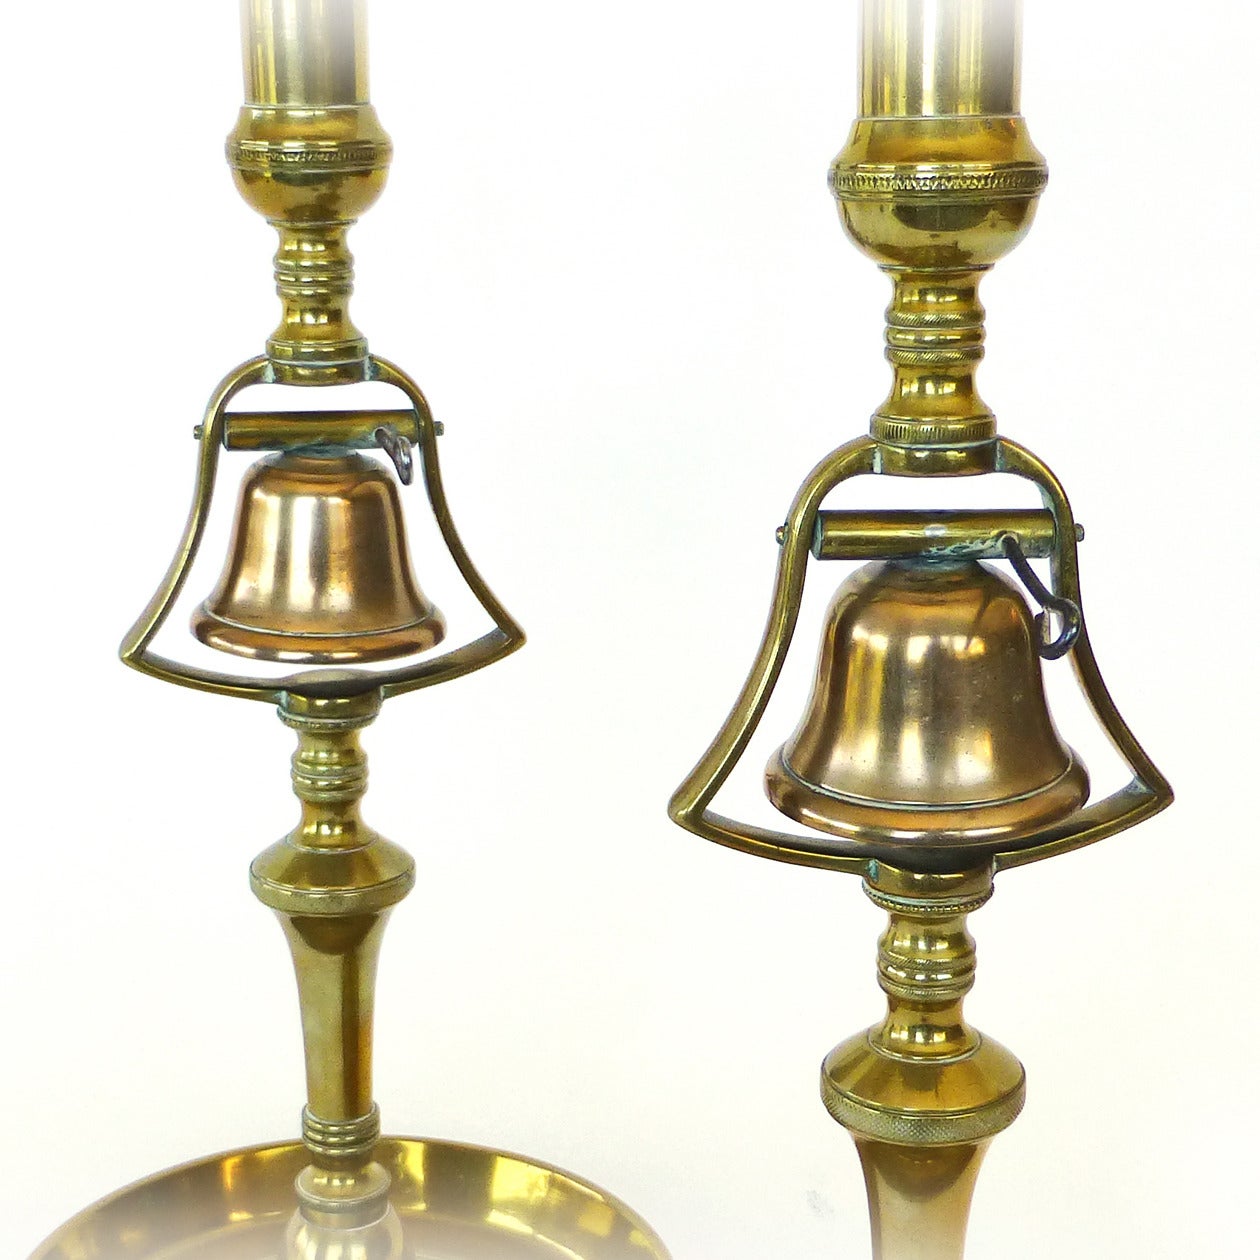 Pair of rare English brass tavern candlesticks with bells, circa 1820.